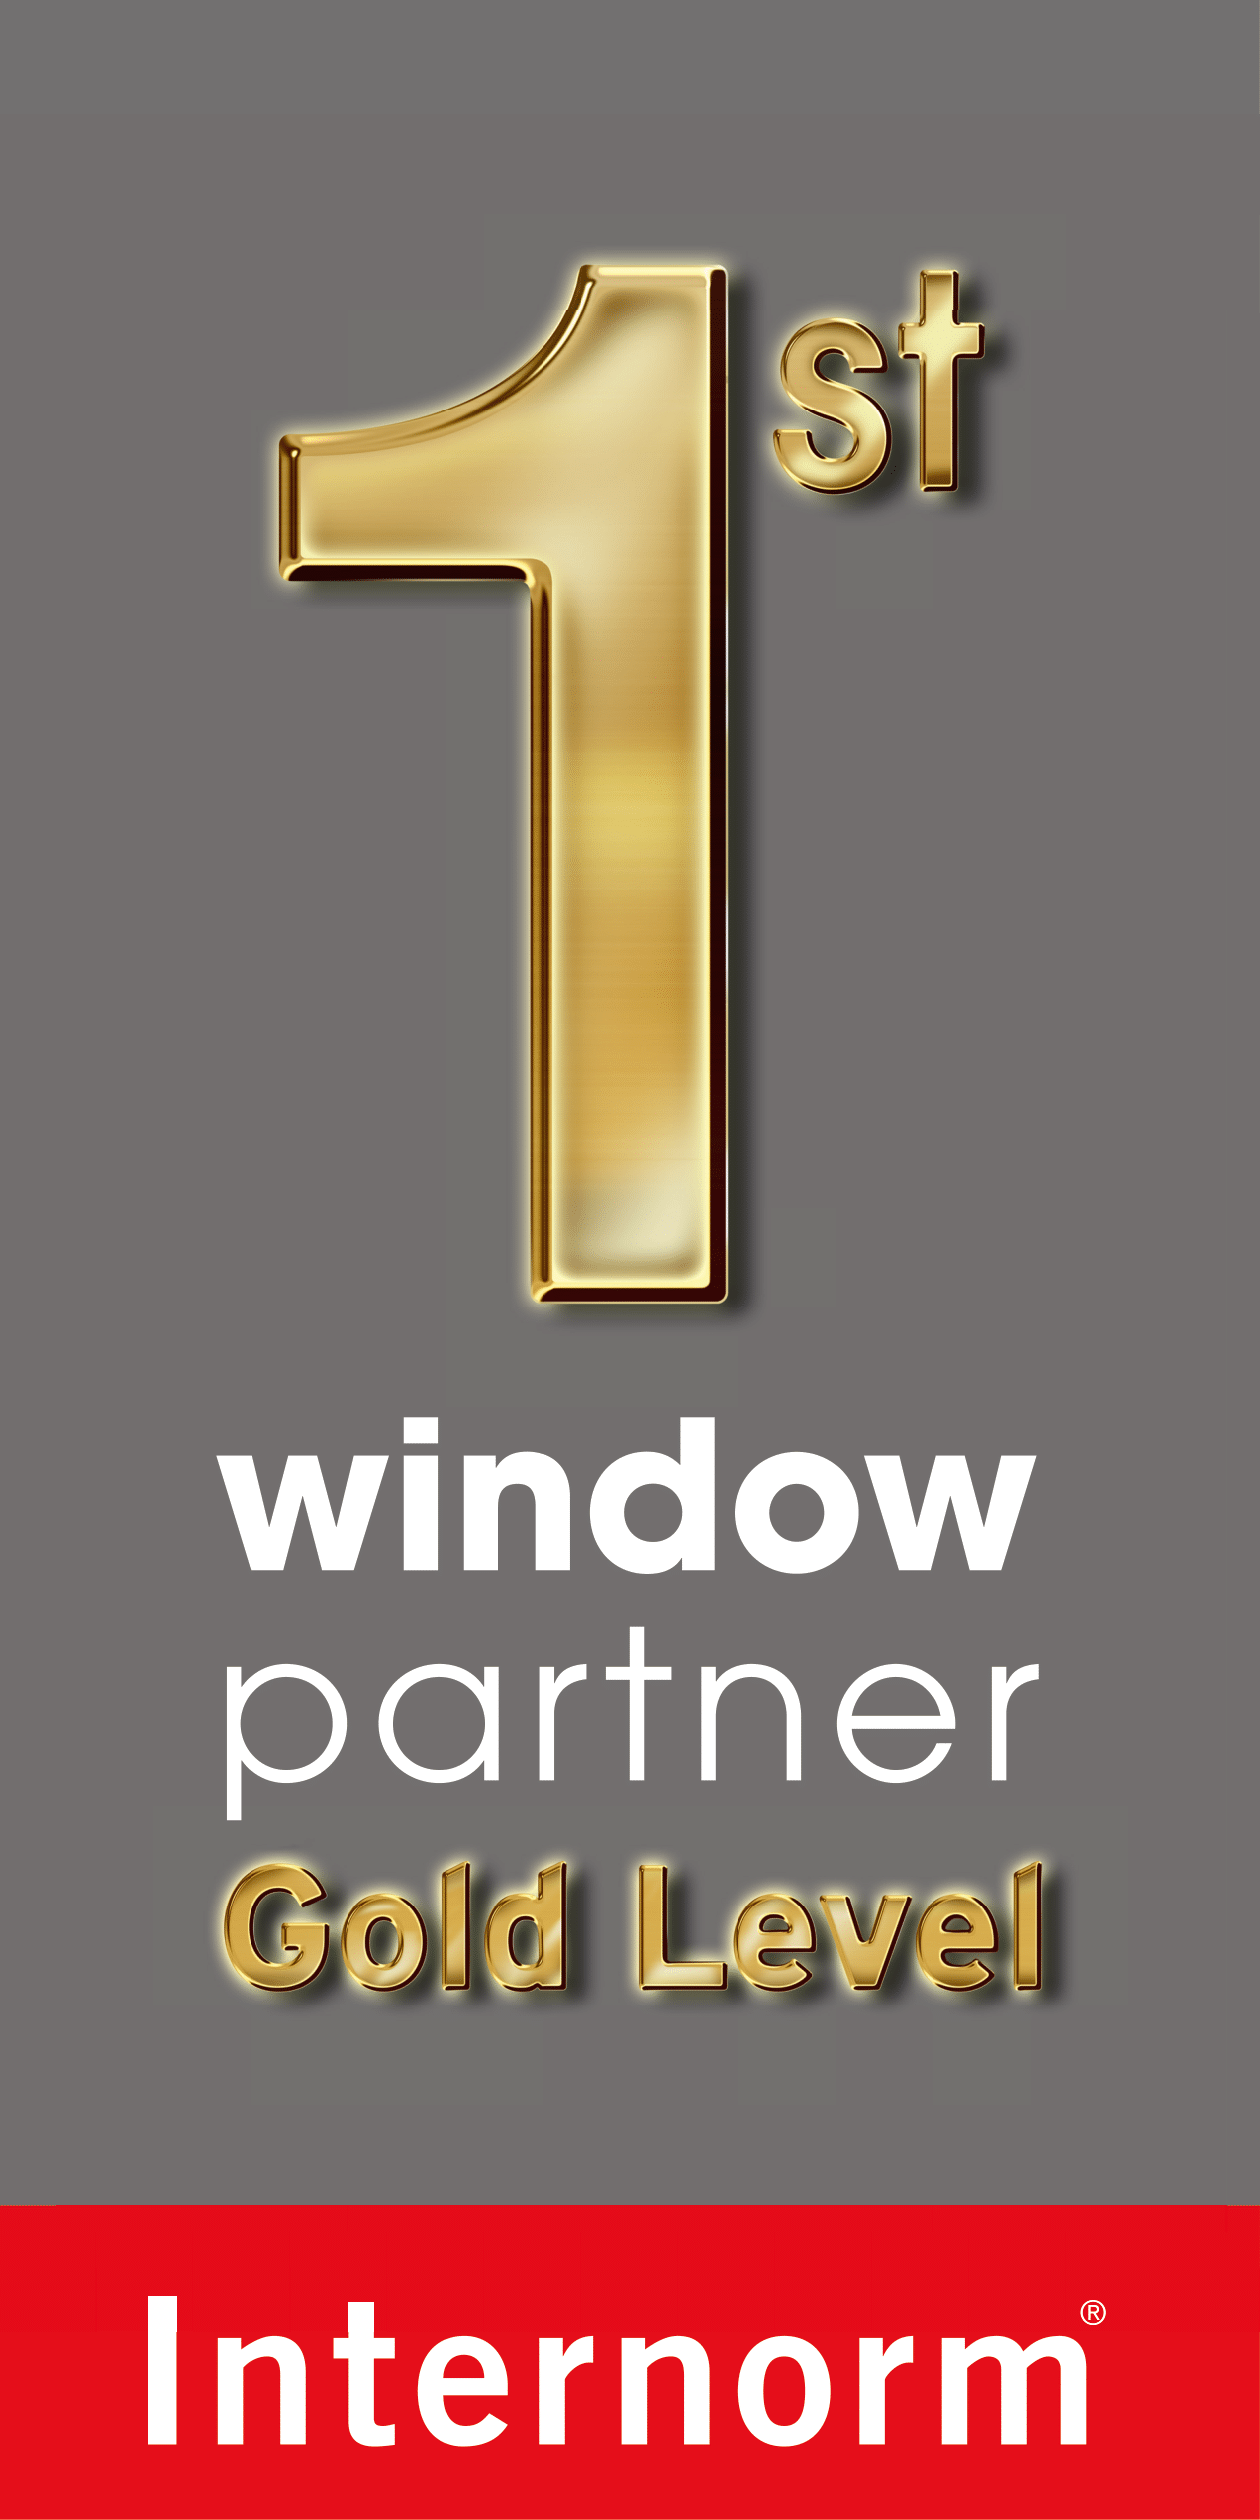 Internorm Gold Level Partner